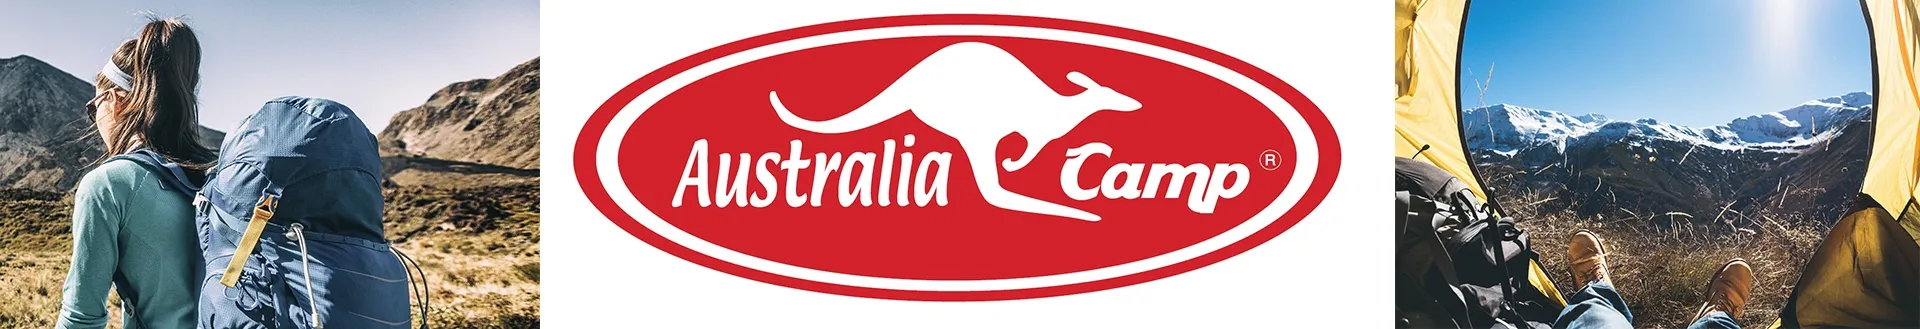 AUSTRALIA CAMP 12